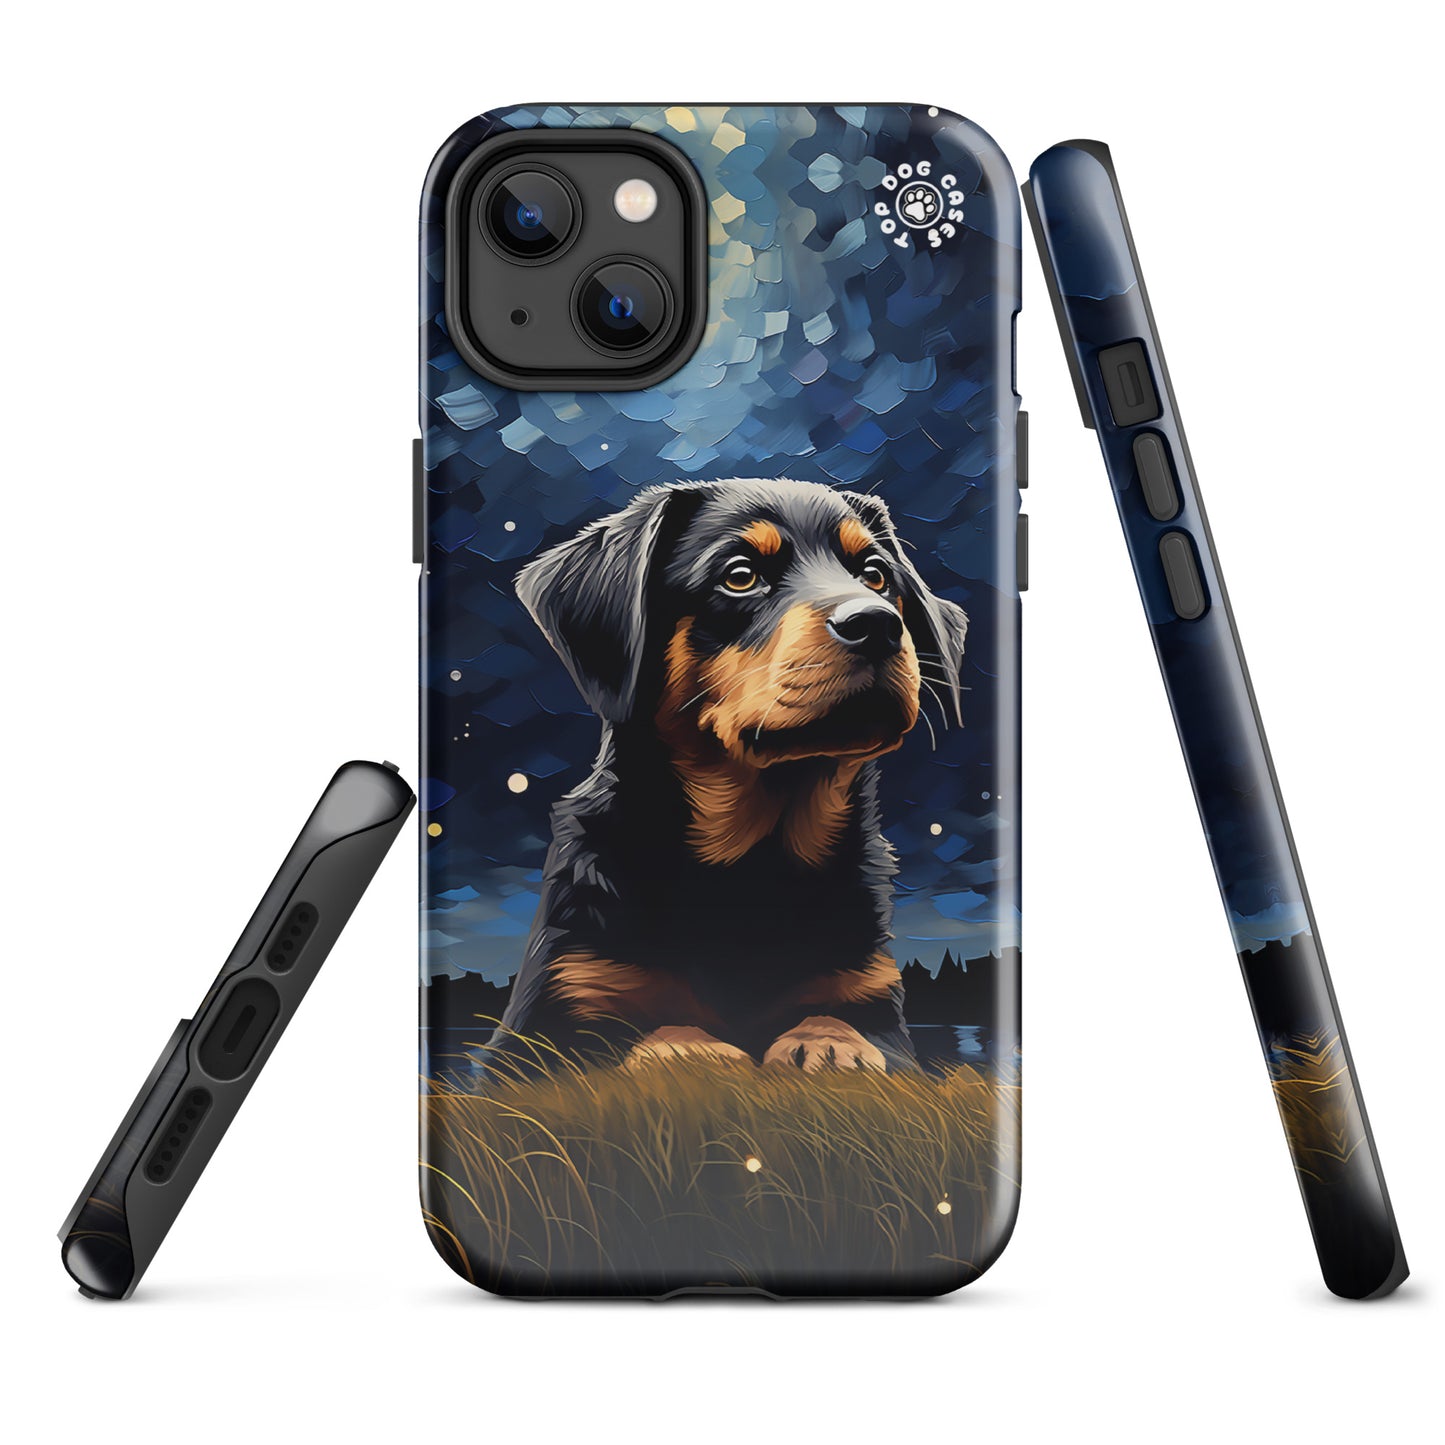 Rottweiler - iPhone 14 Case - Top Dog Cases - #CuteDog, #CuteDogs, #CutePhoneCases, #DogPhoneCase, #dogs, #iPhone14, #iPhone14case, #iPhone14DogCase, #iPhone14Plus, #iPhone14Pluscase, #iPhone14Pro, #iPhone14ProMax, #iPhone14ProMaxCase, #Rottweiler